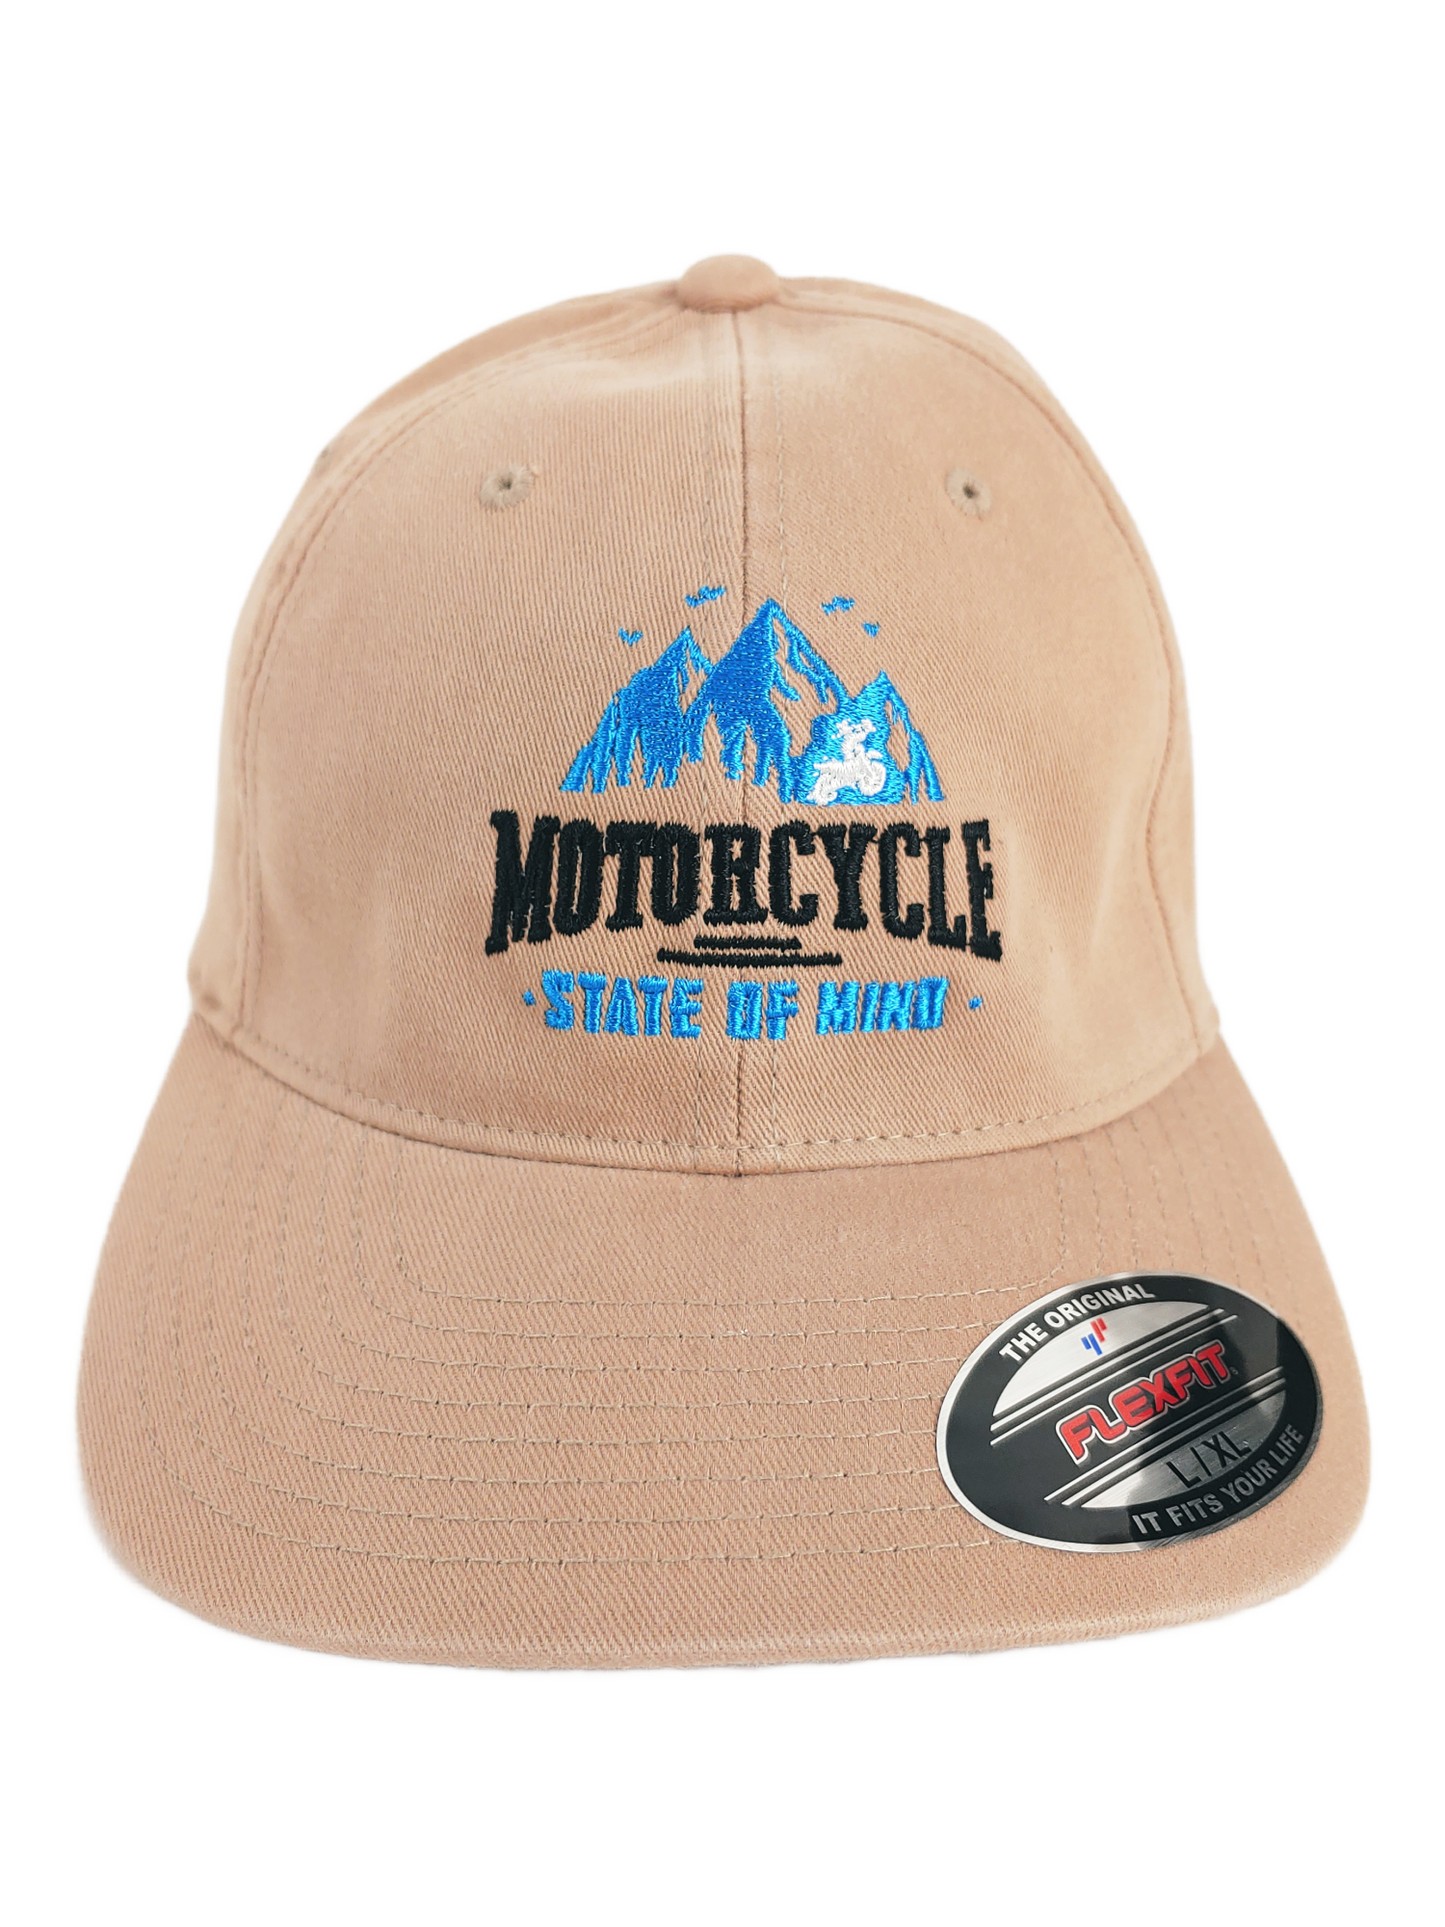 Motorcycle State of Mind - Mountains - Khaki Flex Fit - Baseball Style Hat